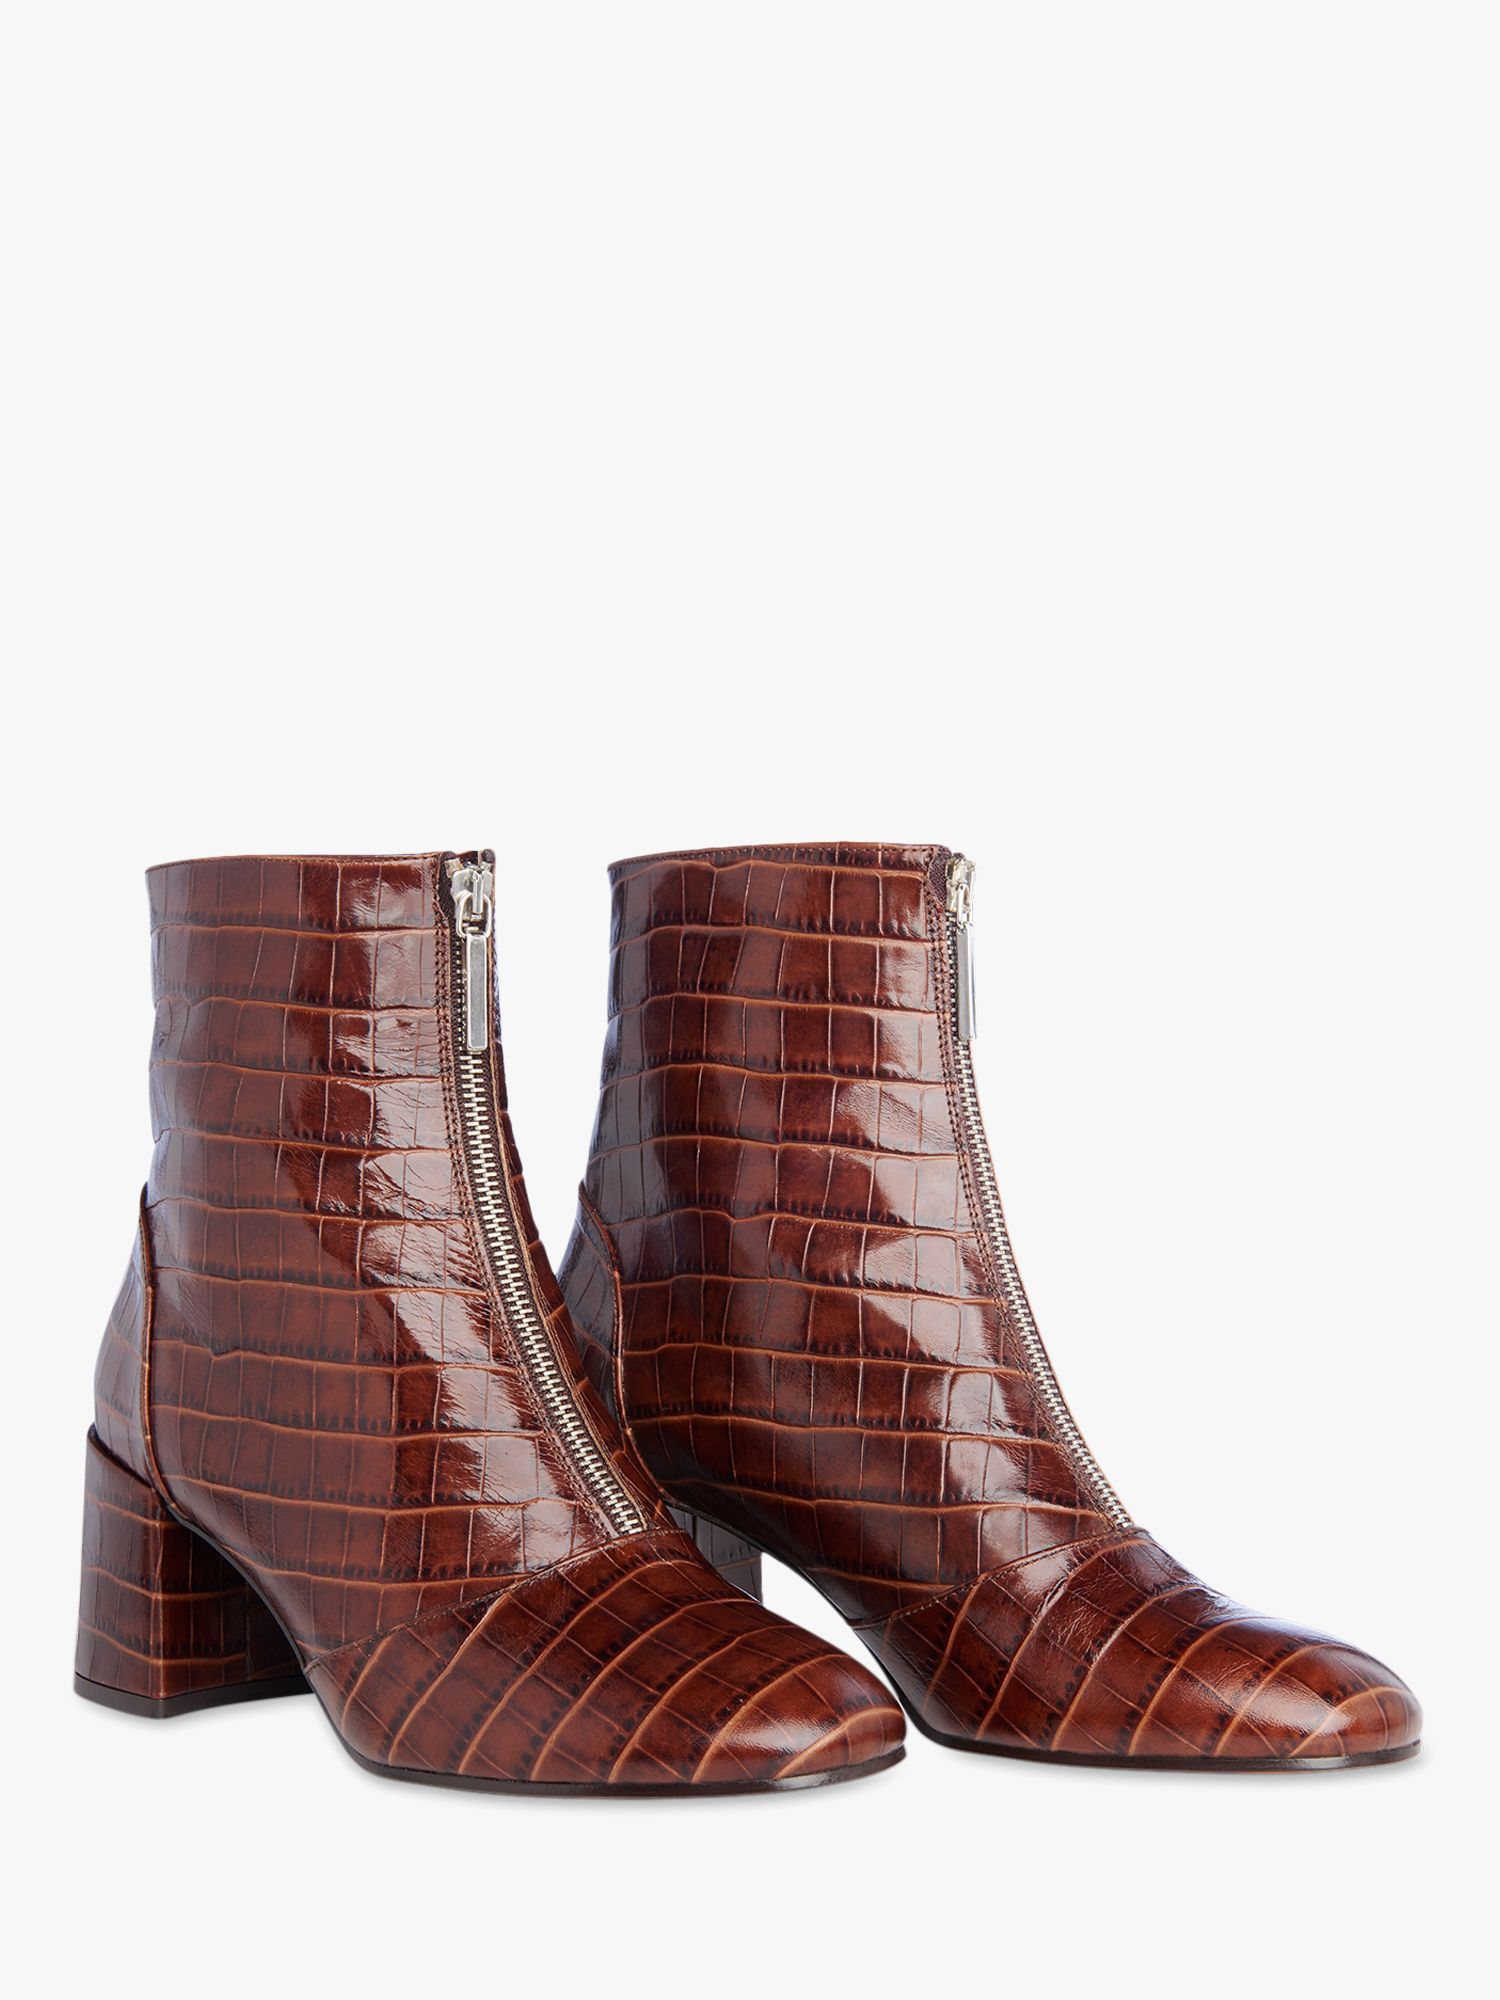 brown croc boots